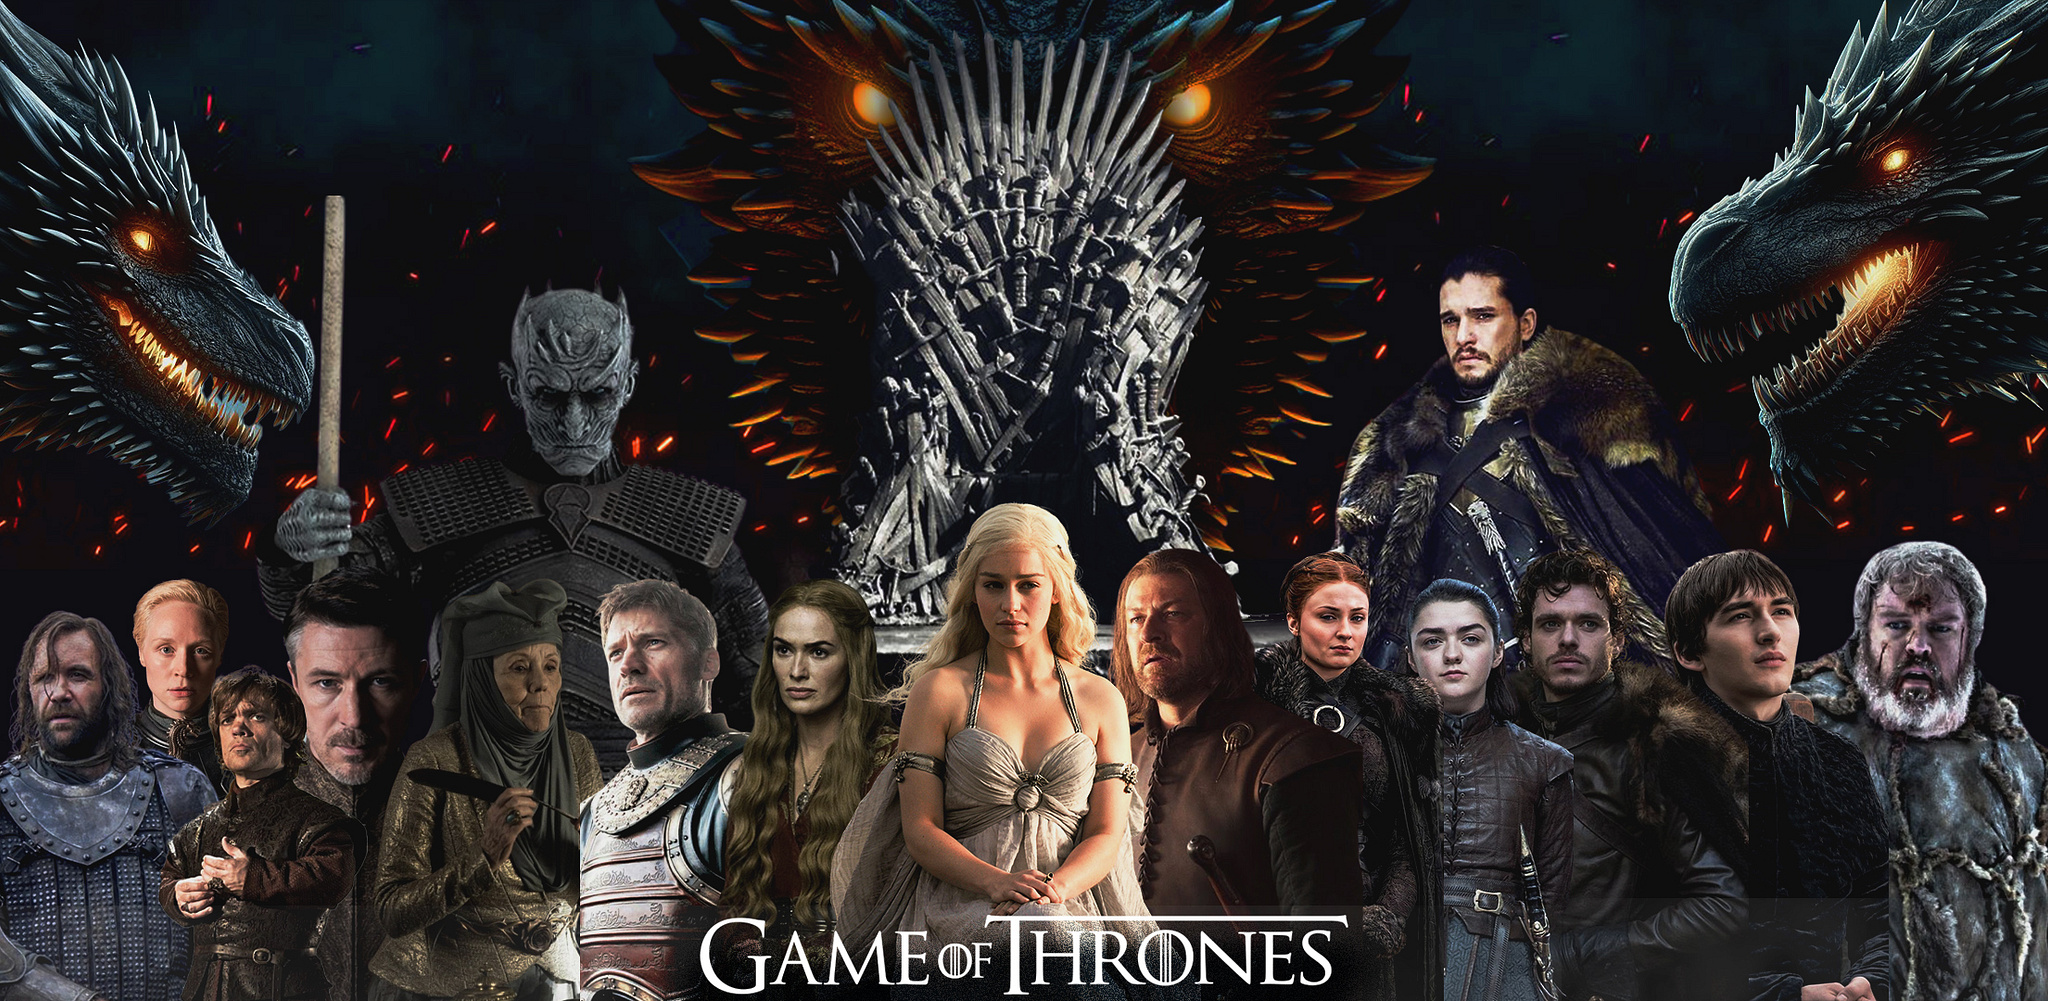 Game Of Thrones Poster by Taskir Bin Alam on Dribbble